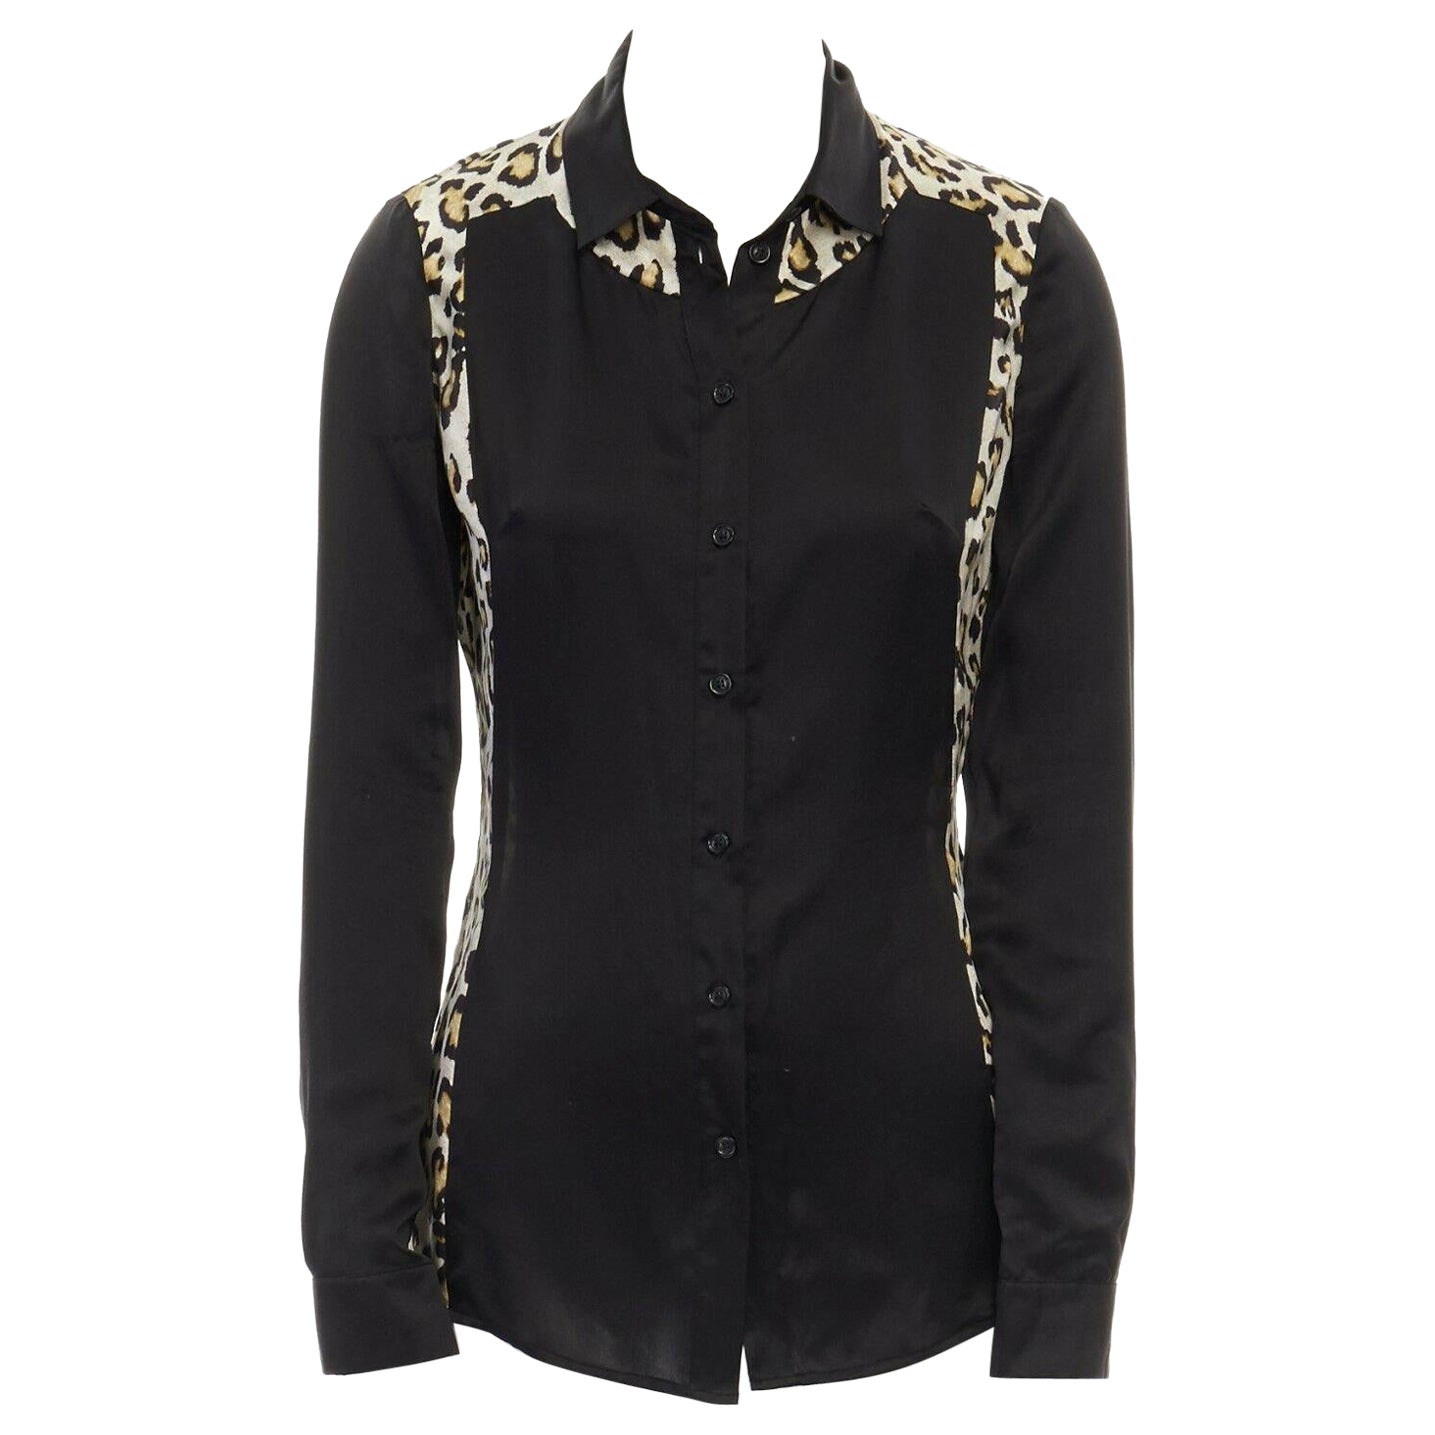 JUST CAVALLI 100% silk black leopard colorblocked button front shirt IT40 S For Sale